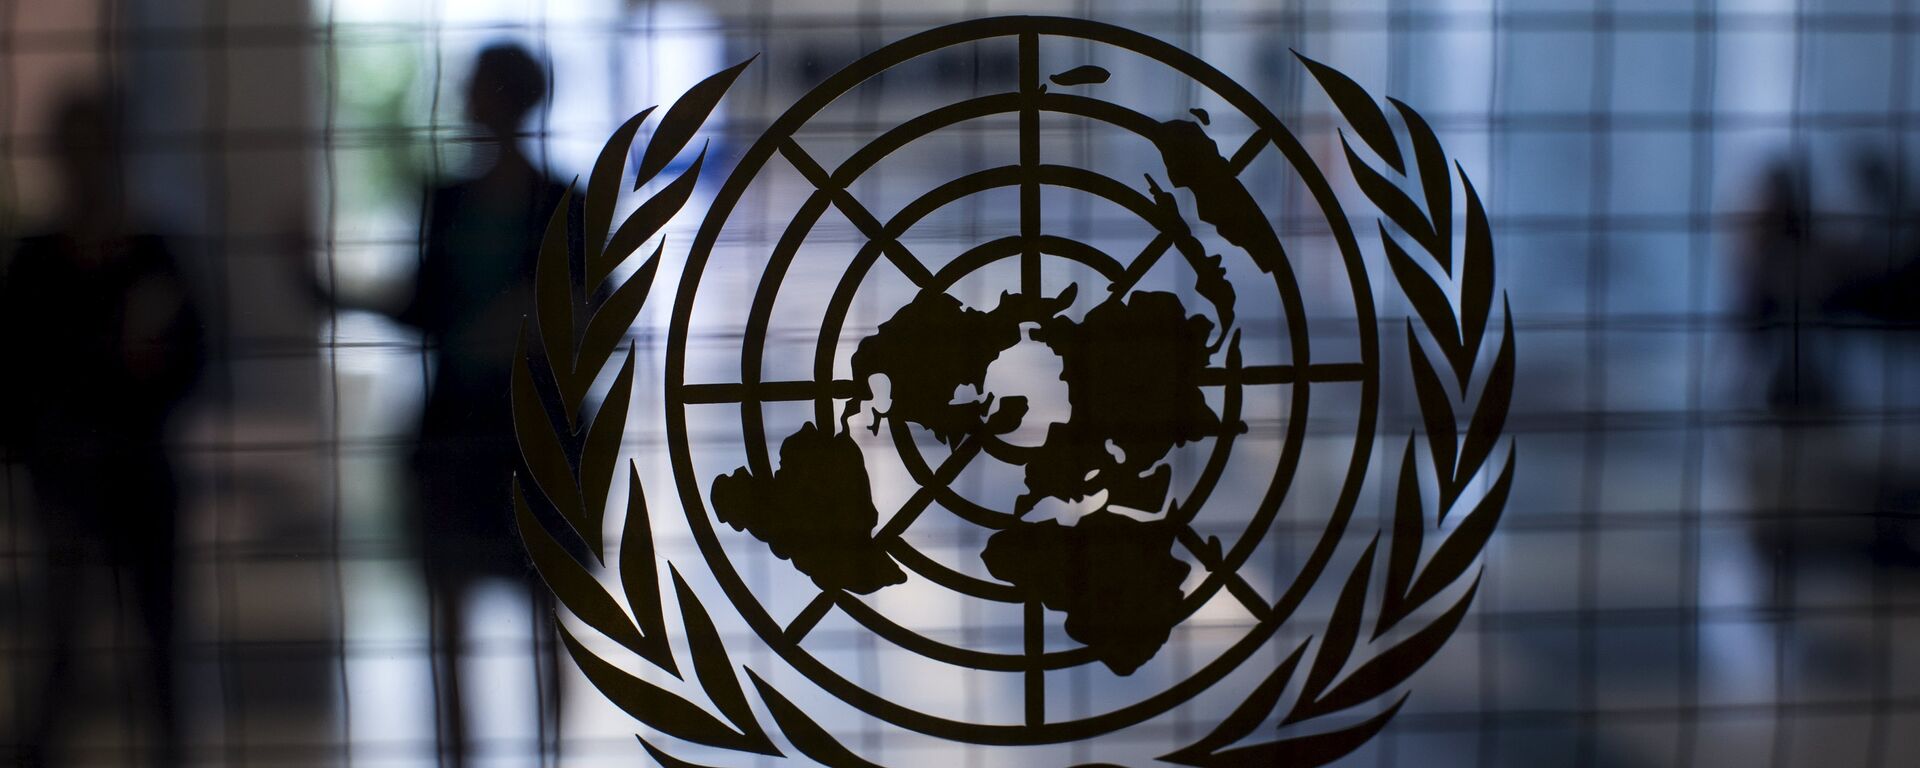 Logo de la ONU - Sputnik Mundo, 1920, 17.11.2021